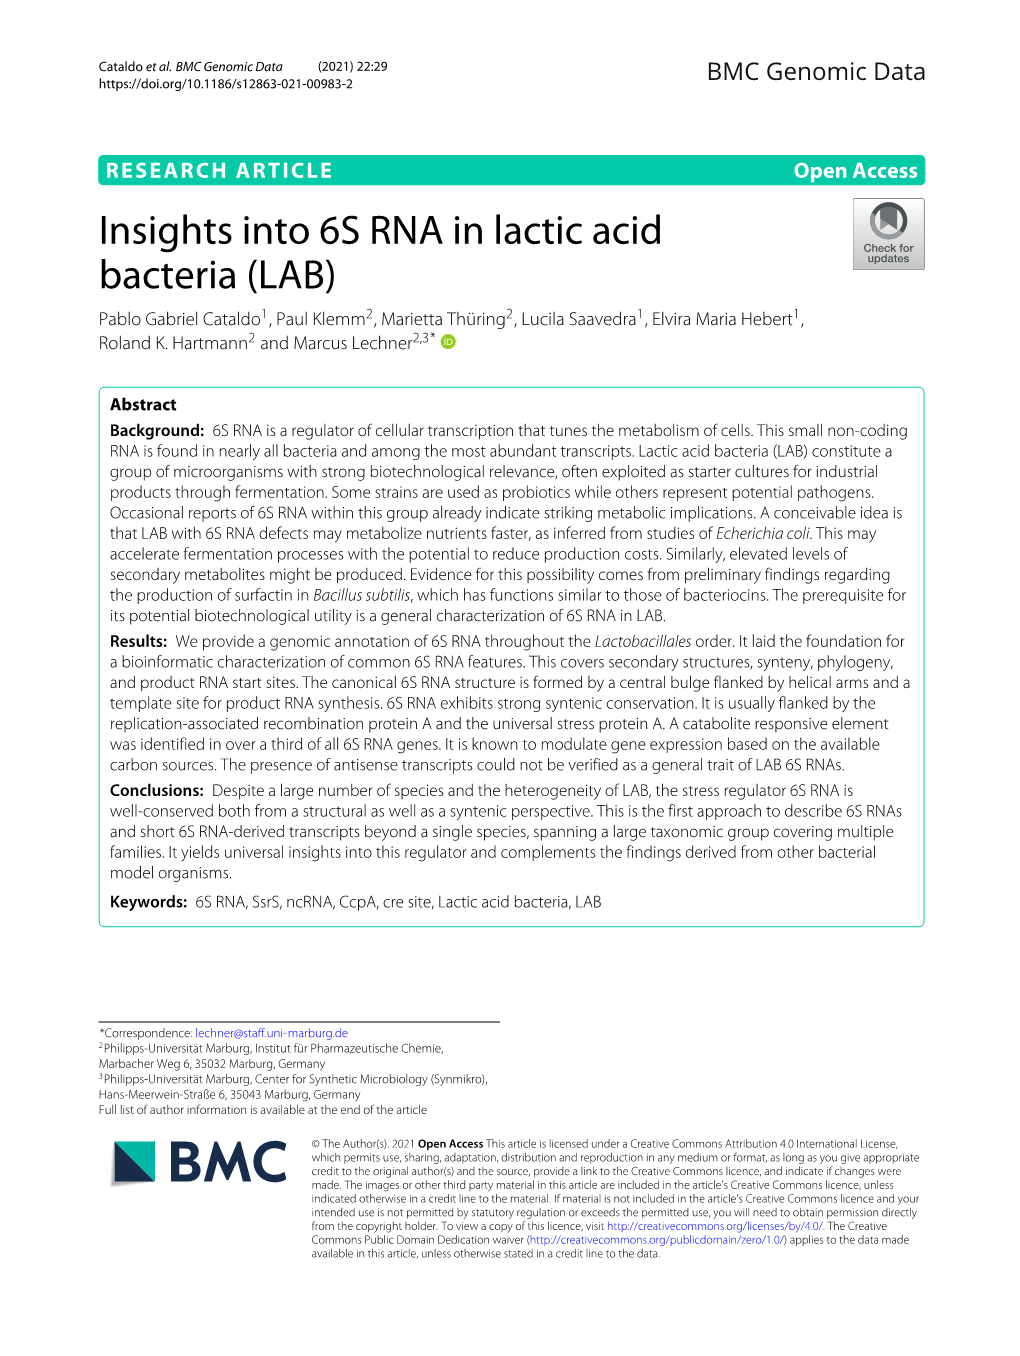 Insights Into 6S RNA in Lactic Acid Bacteria (LAB) Pablo Gabriel Cataldo1,Paulklemm2, Marietta Thüring2, Lucila Saavedra1, Elvira Maria Hebert1, Roland K